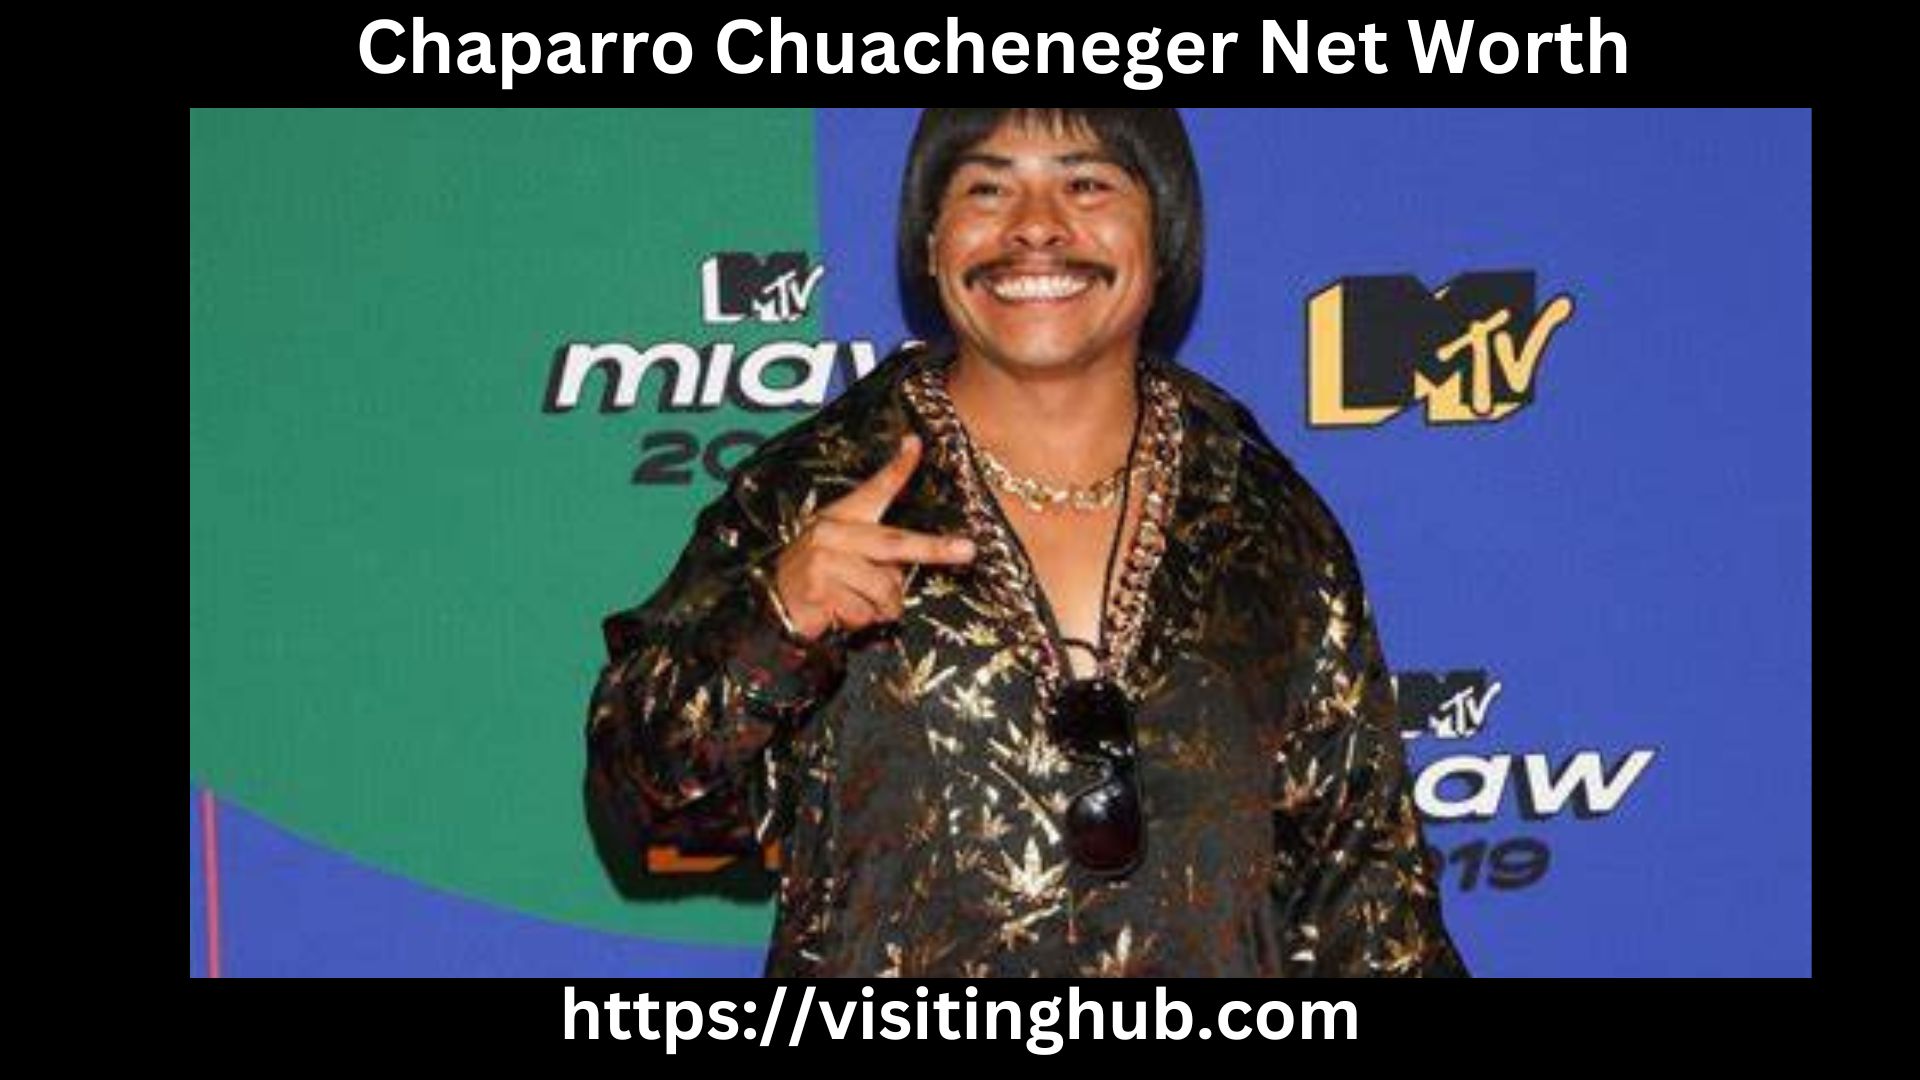 Chaparro Chuacheneger Net Worth